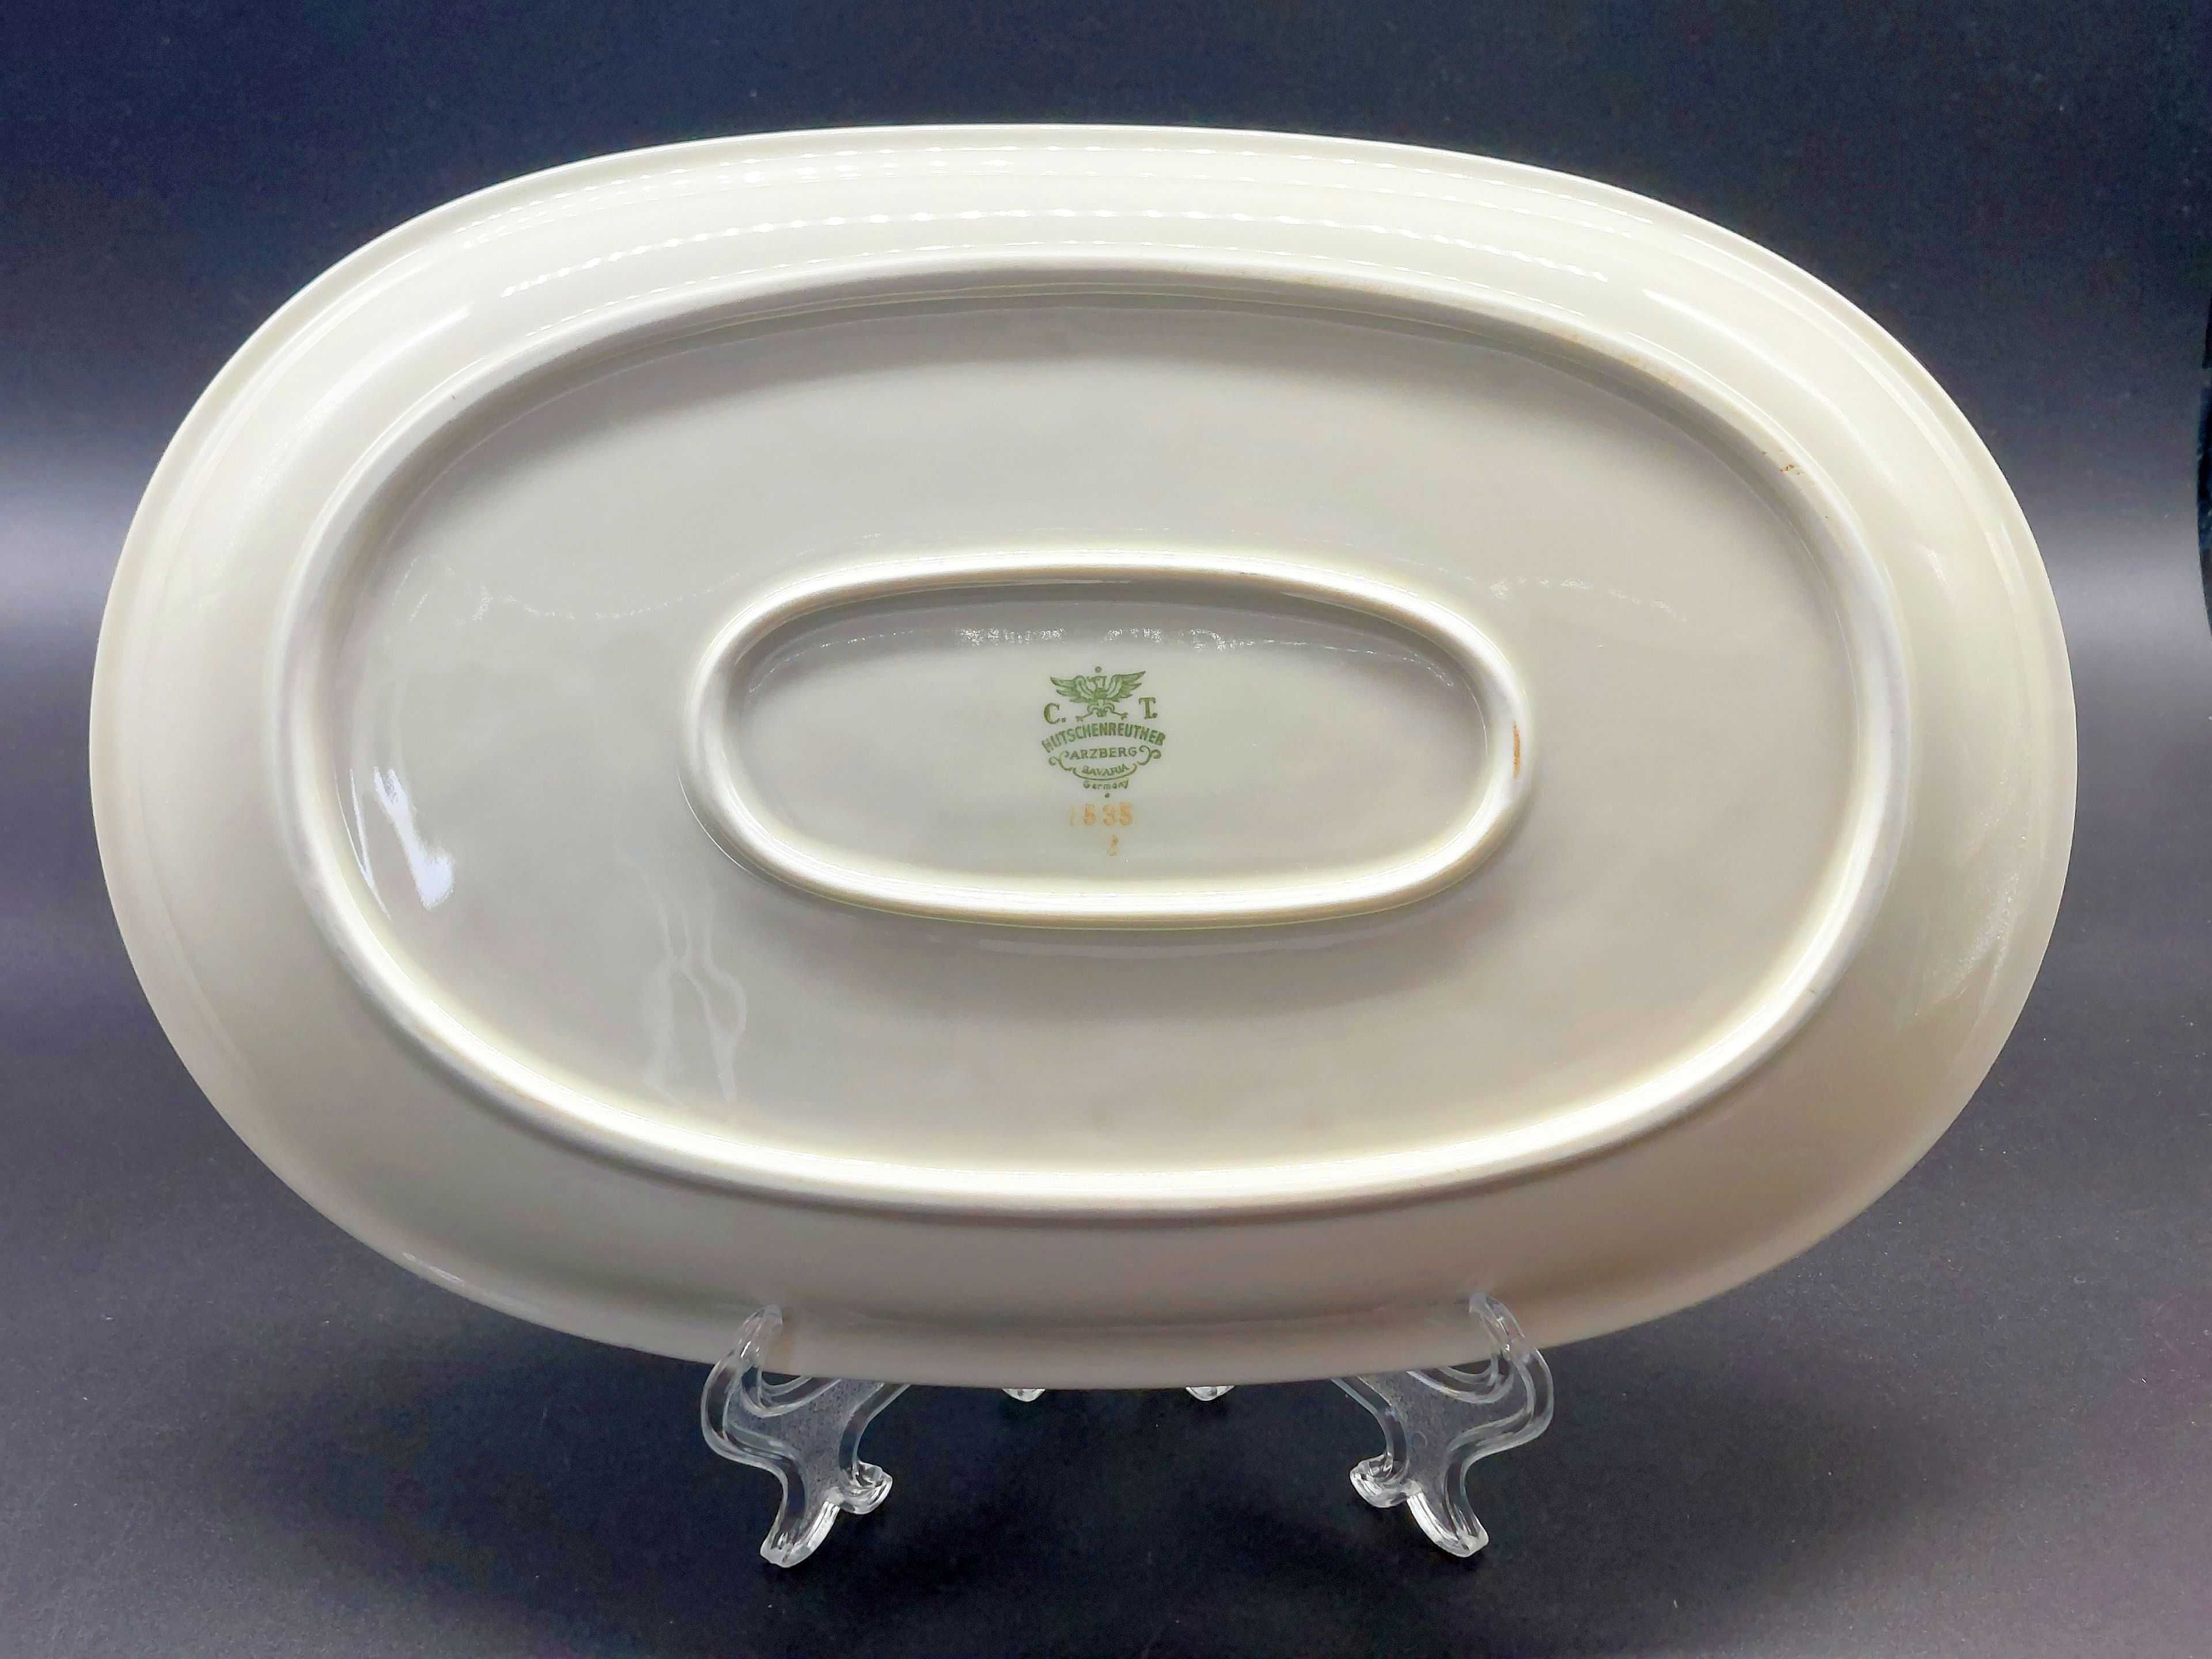 Patera półmisek porcelana C.T.Hutschenreuther Arzberg kolekcje vintage